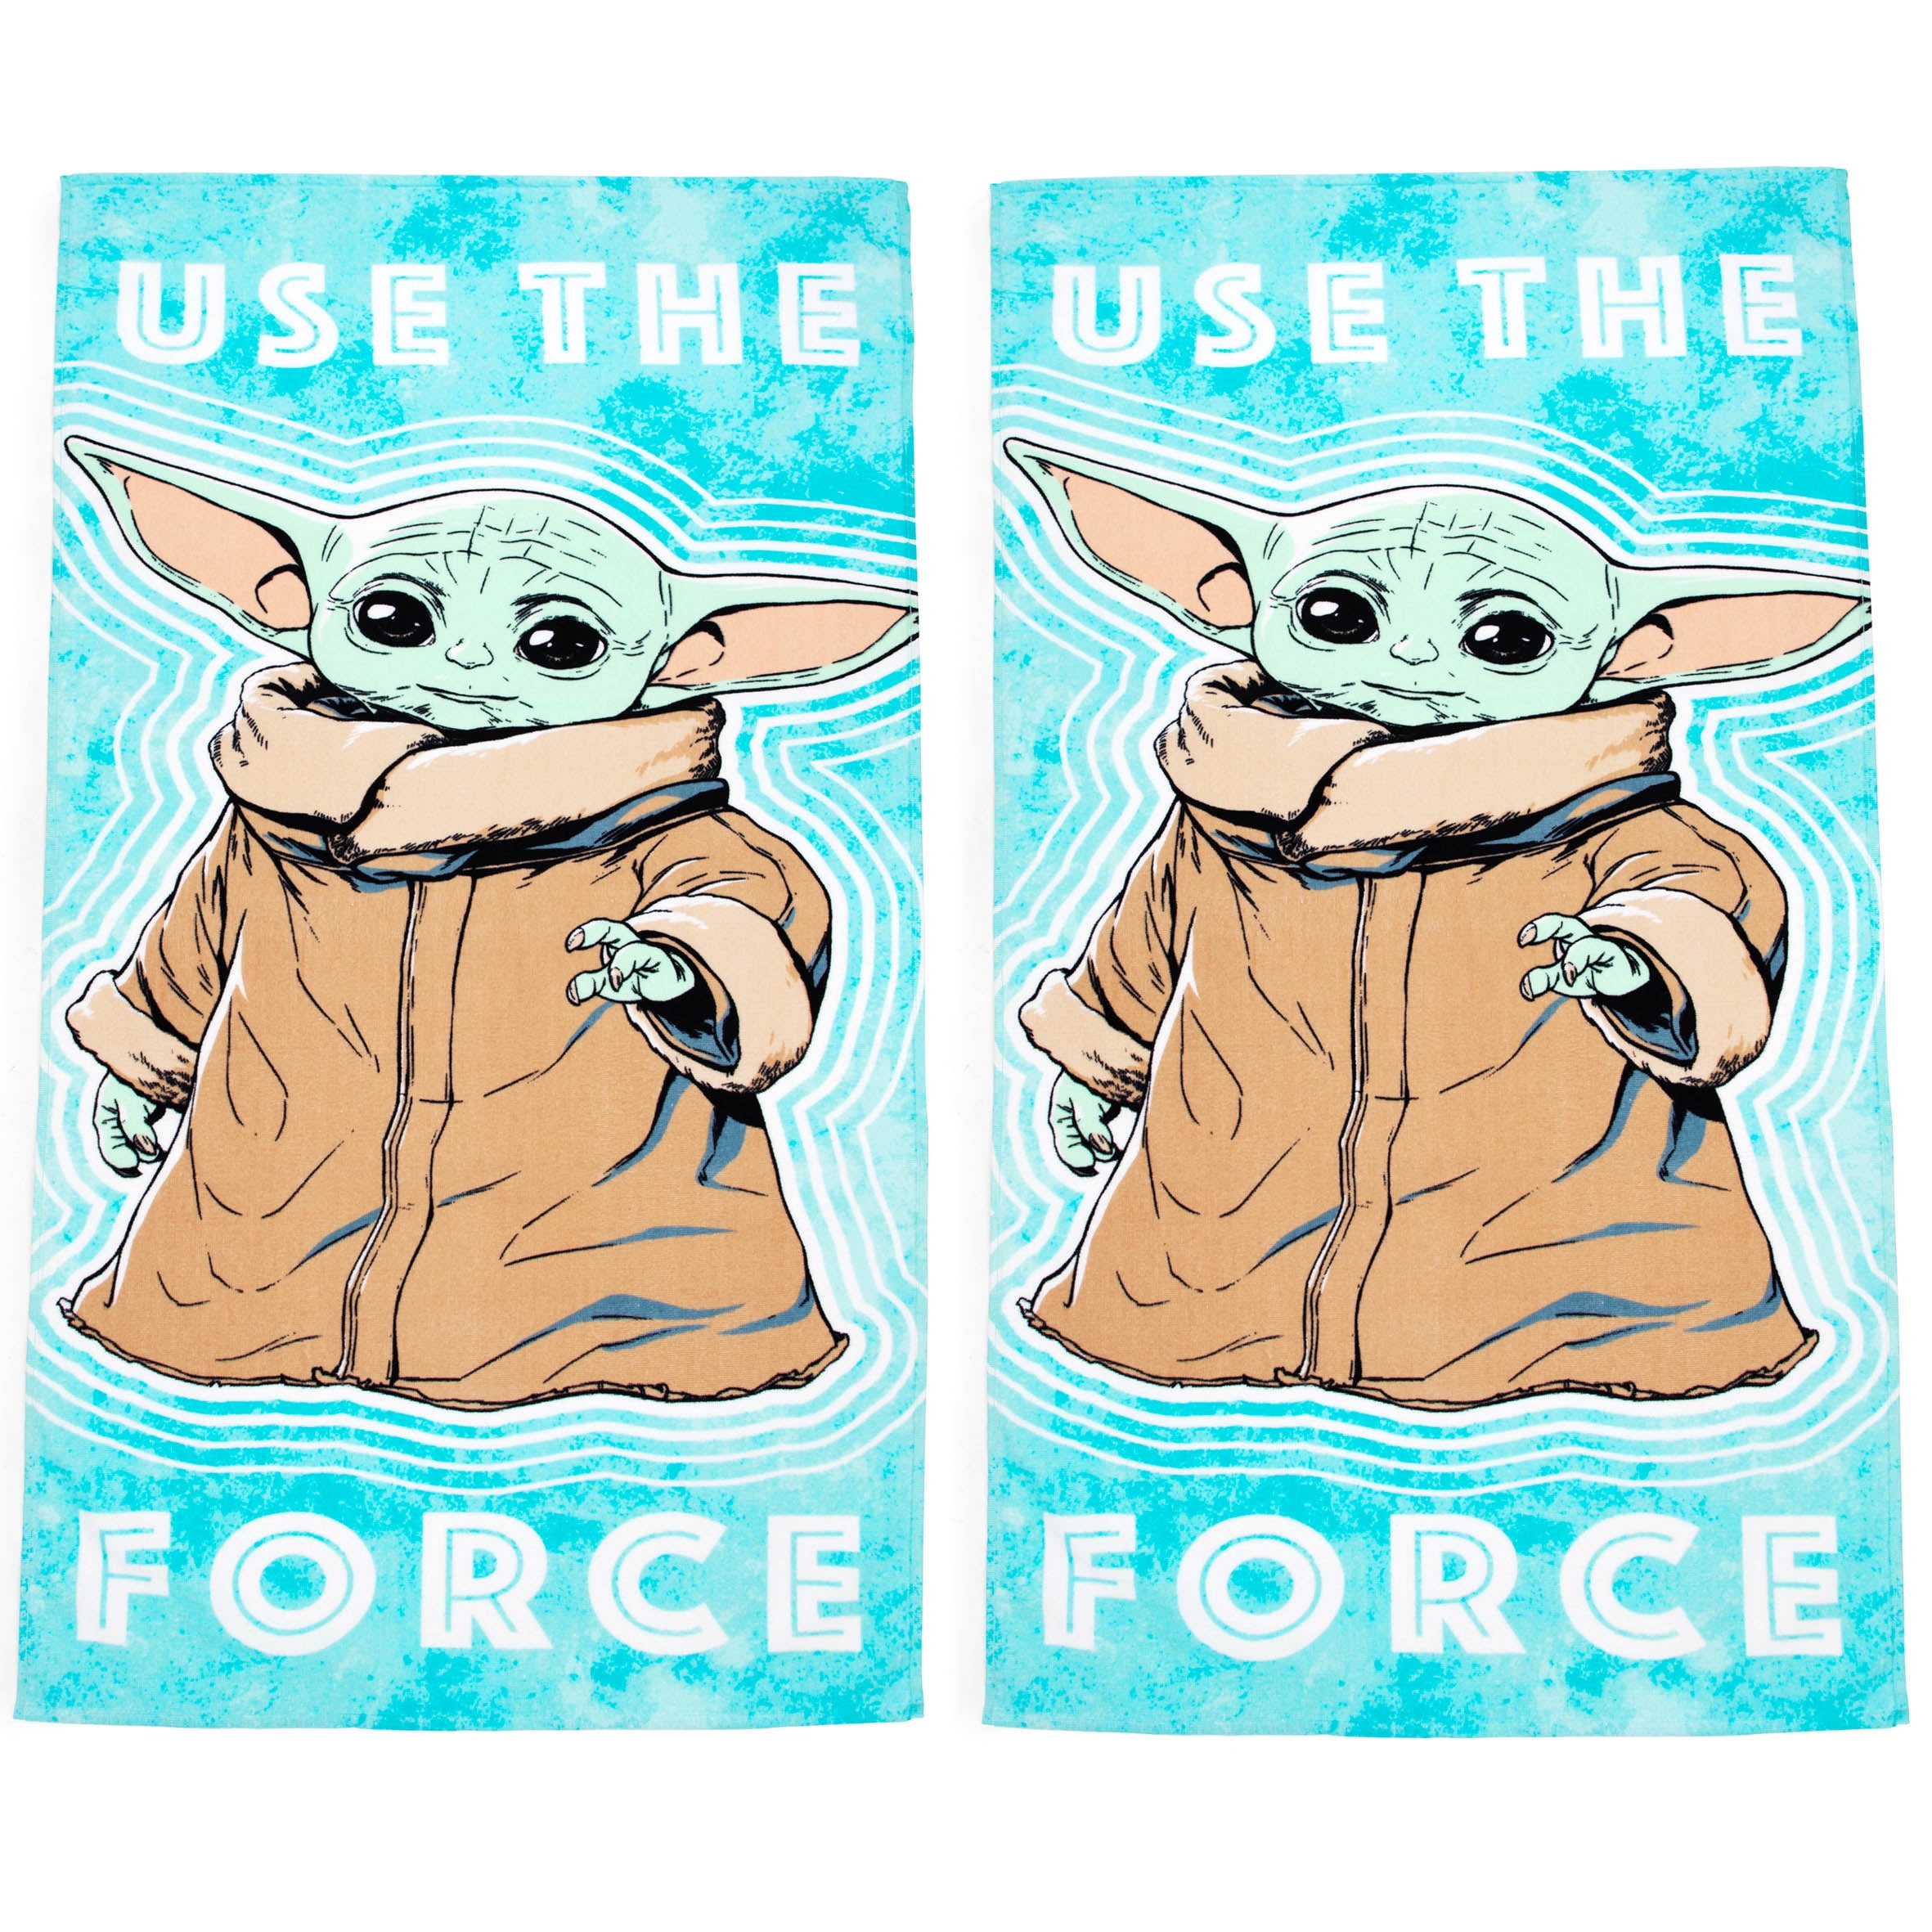 Star Wars Cartoons Kitchen Towel, Yoda Towel, Star Wars Kitchen Décor